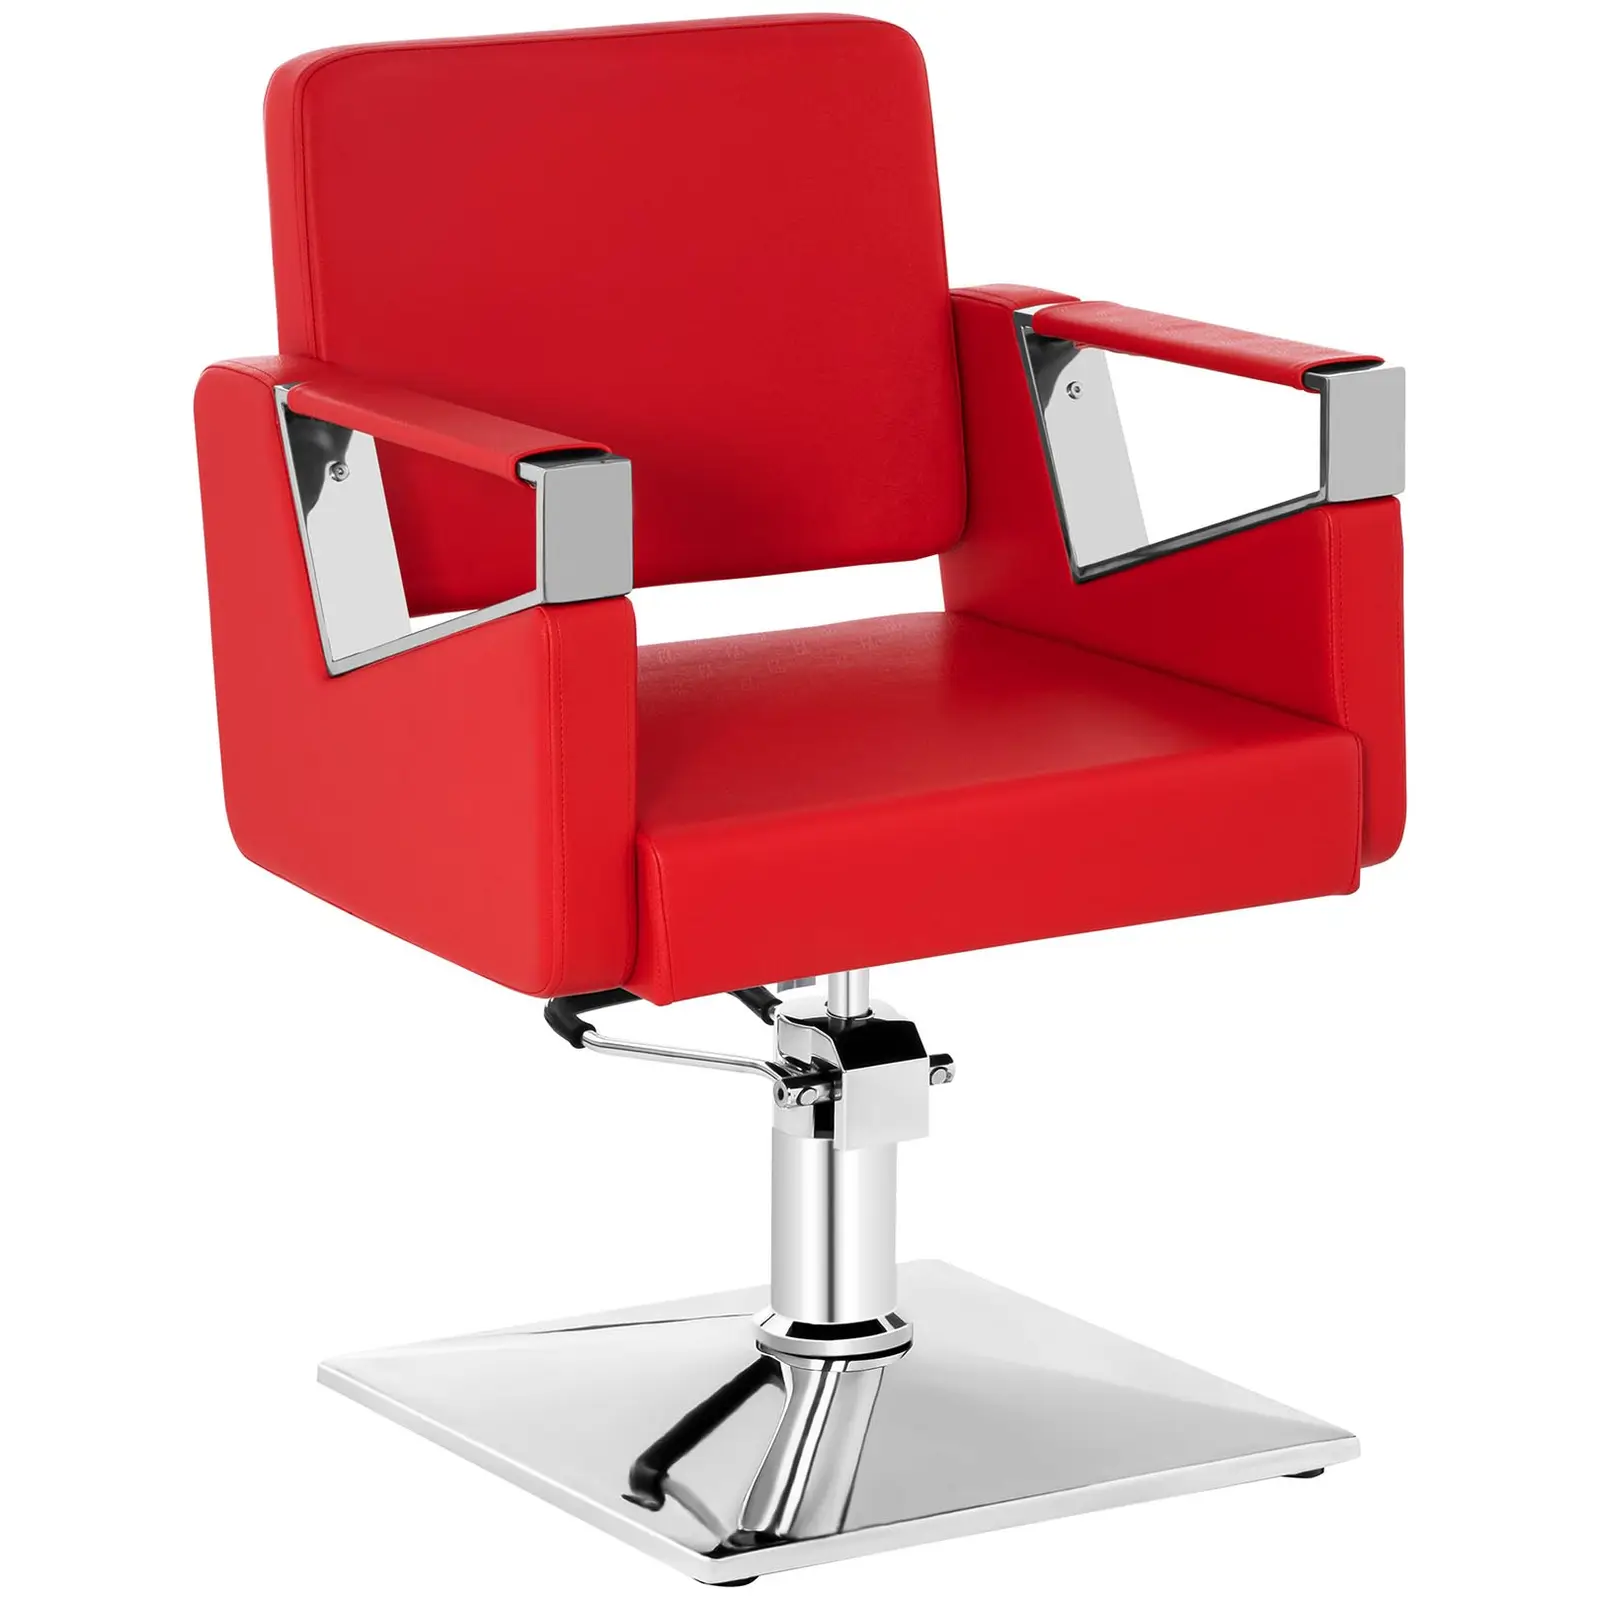 Fodrász szék - 445–550 mm - 200 kg - Red